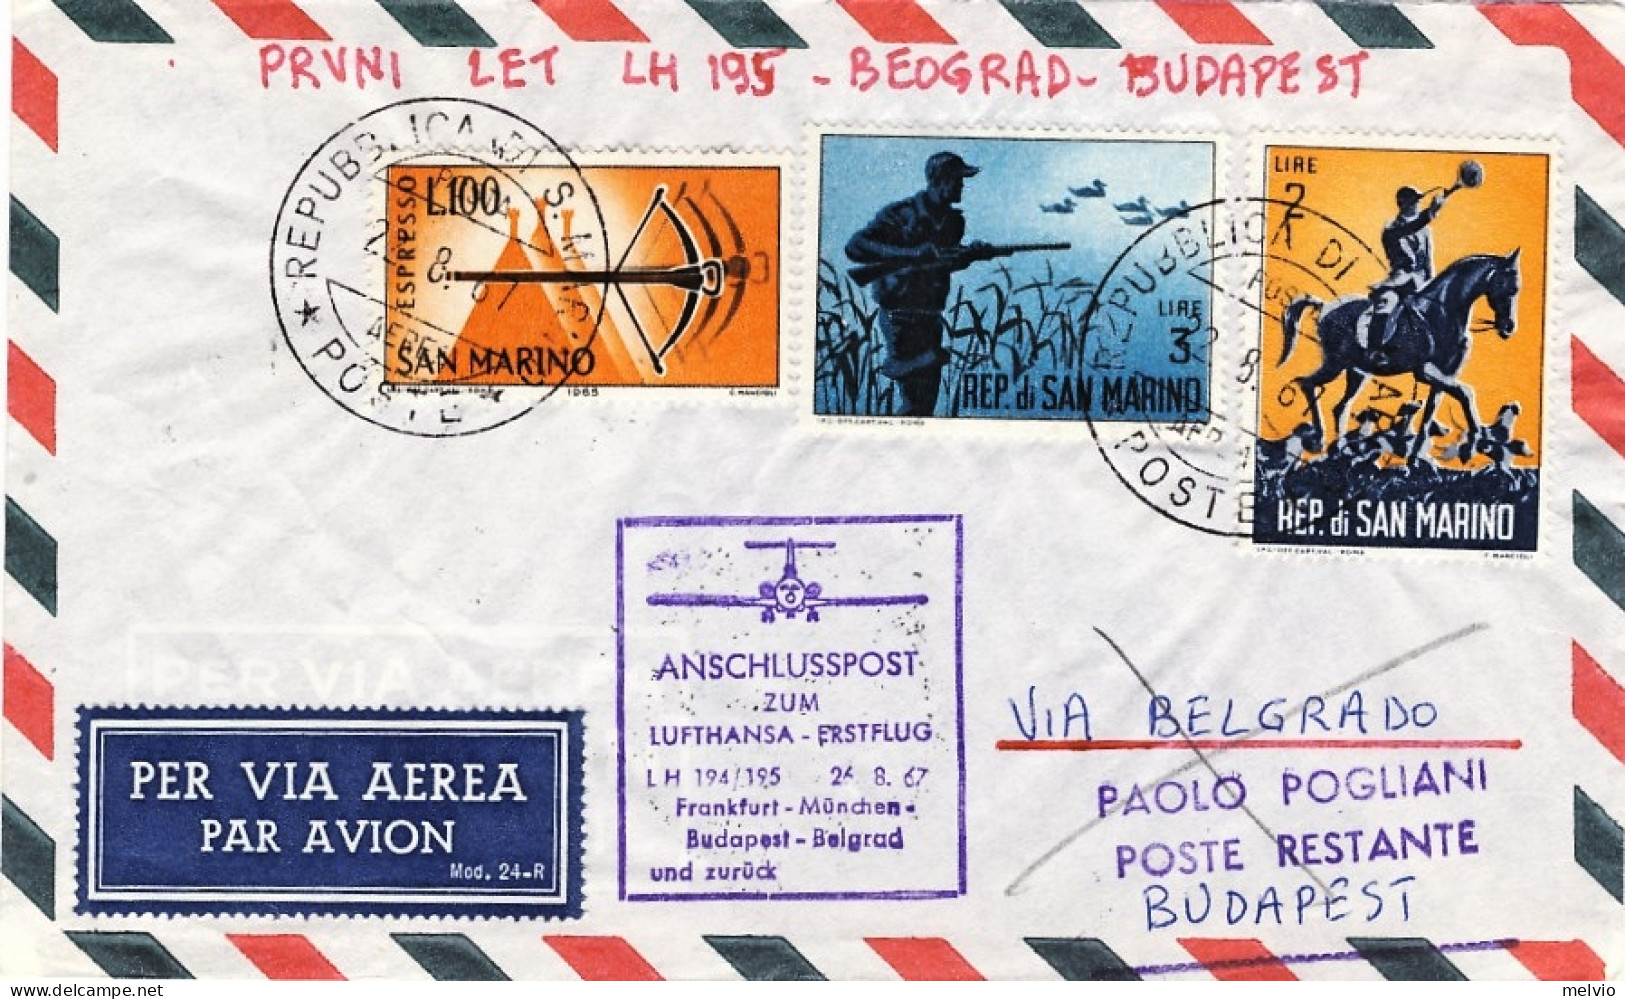 San Marino-1967 I^volo Lufthansa LH 194 Belgrado-Budapest - Airmail